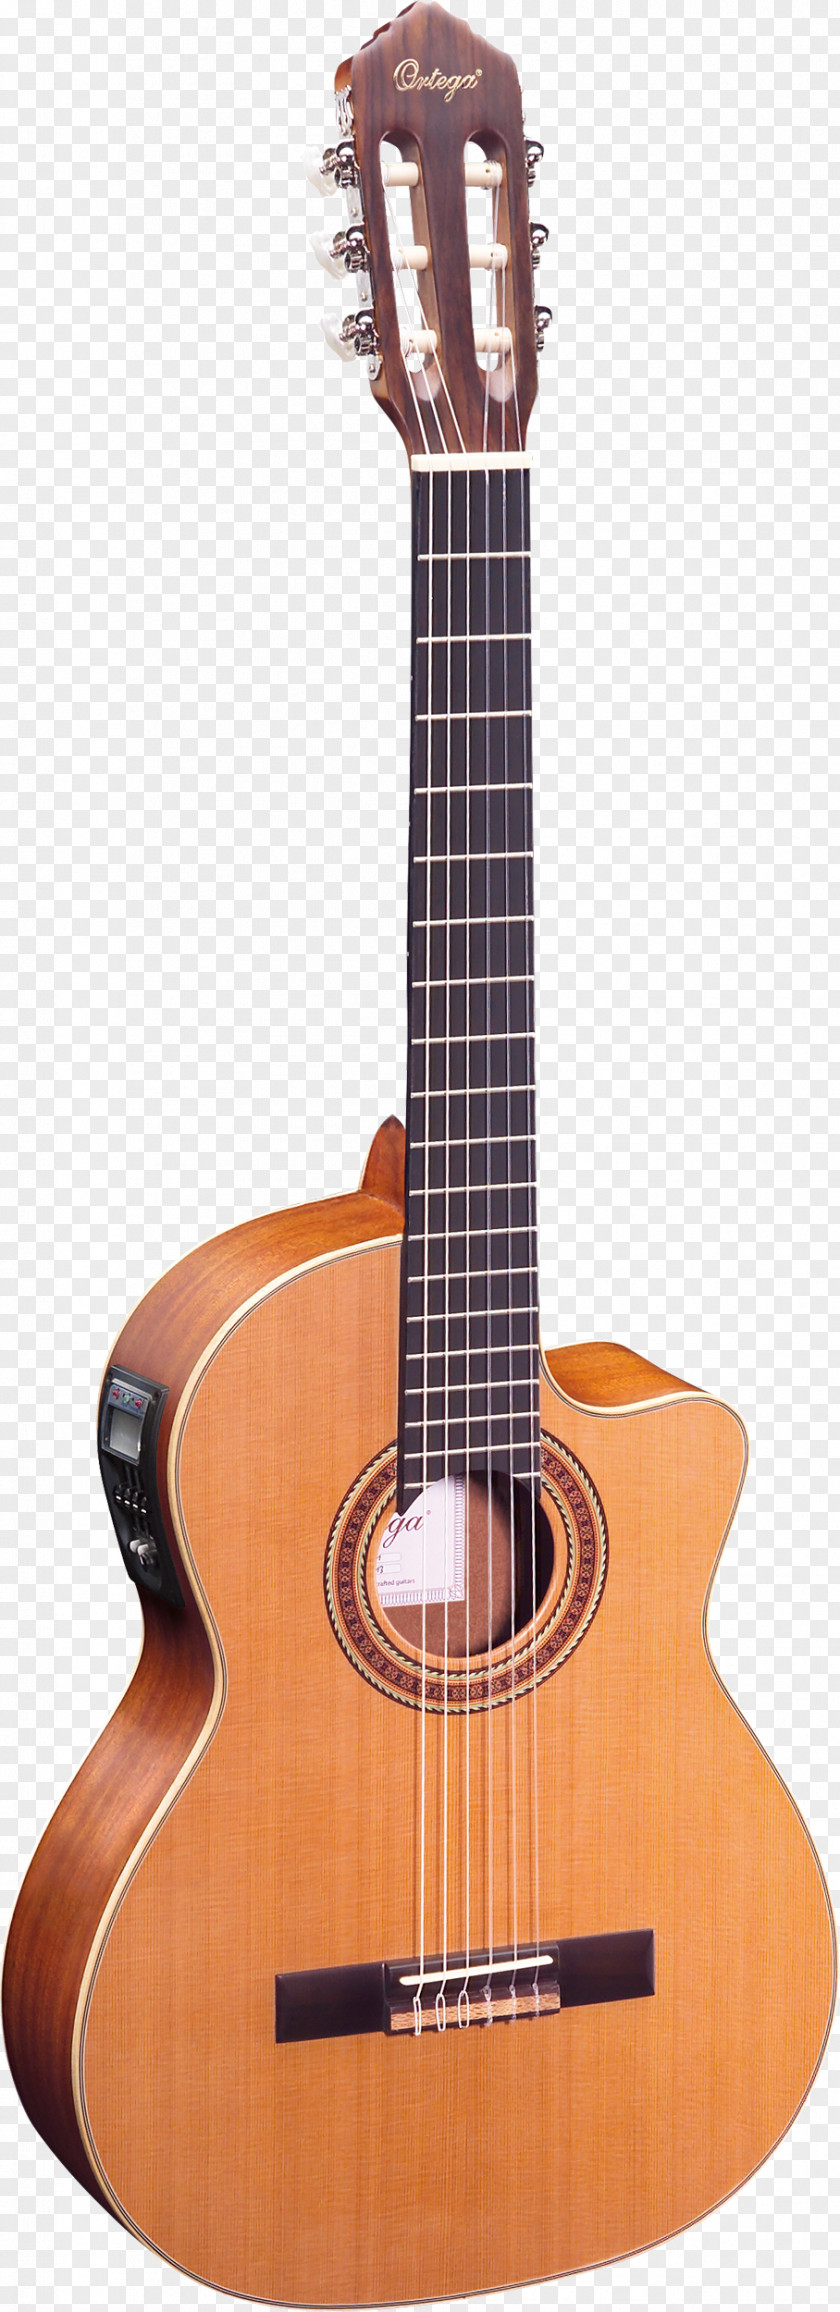 Amancio Ortega Fender Bullet Steel-string Acoustic Guitar Classical Acoustic-electric PNG